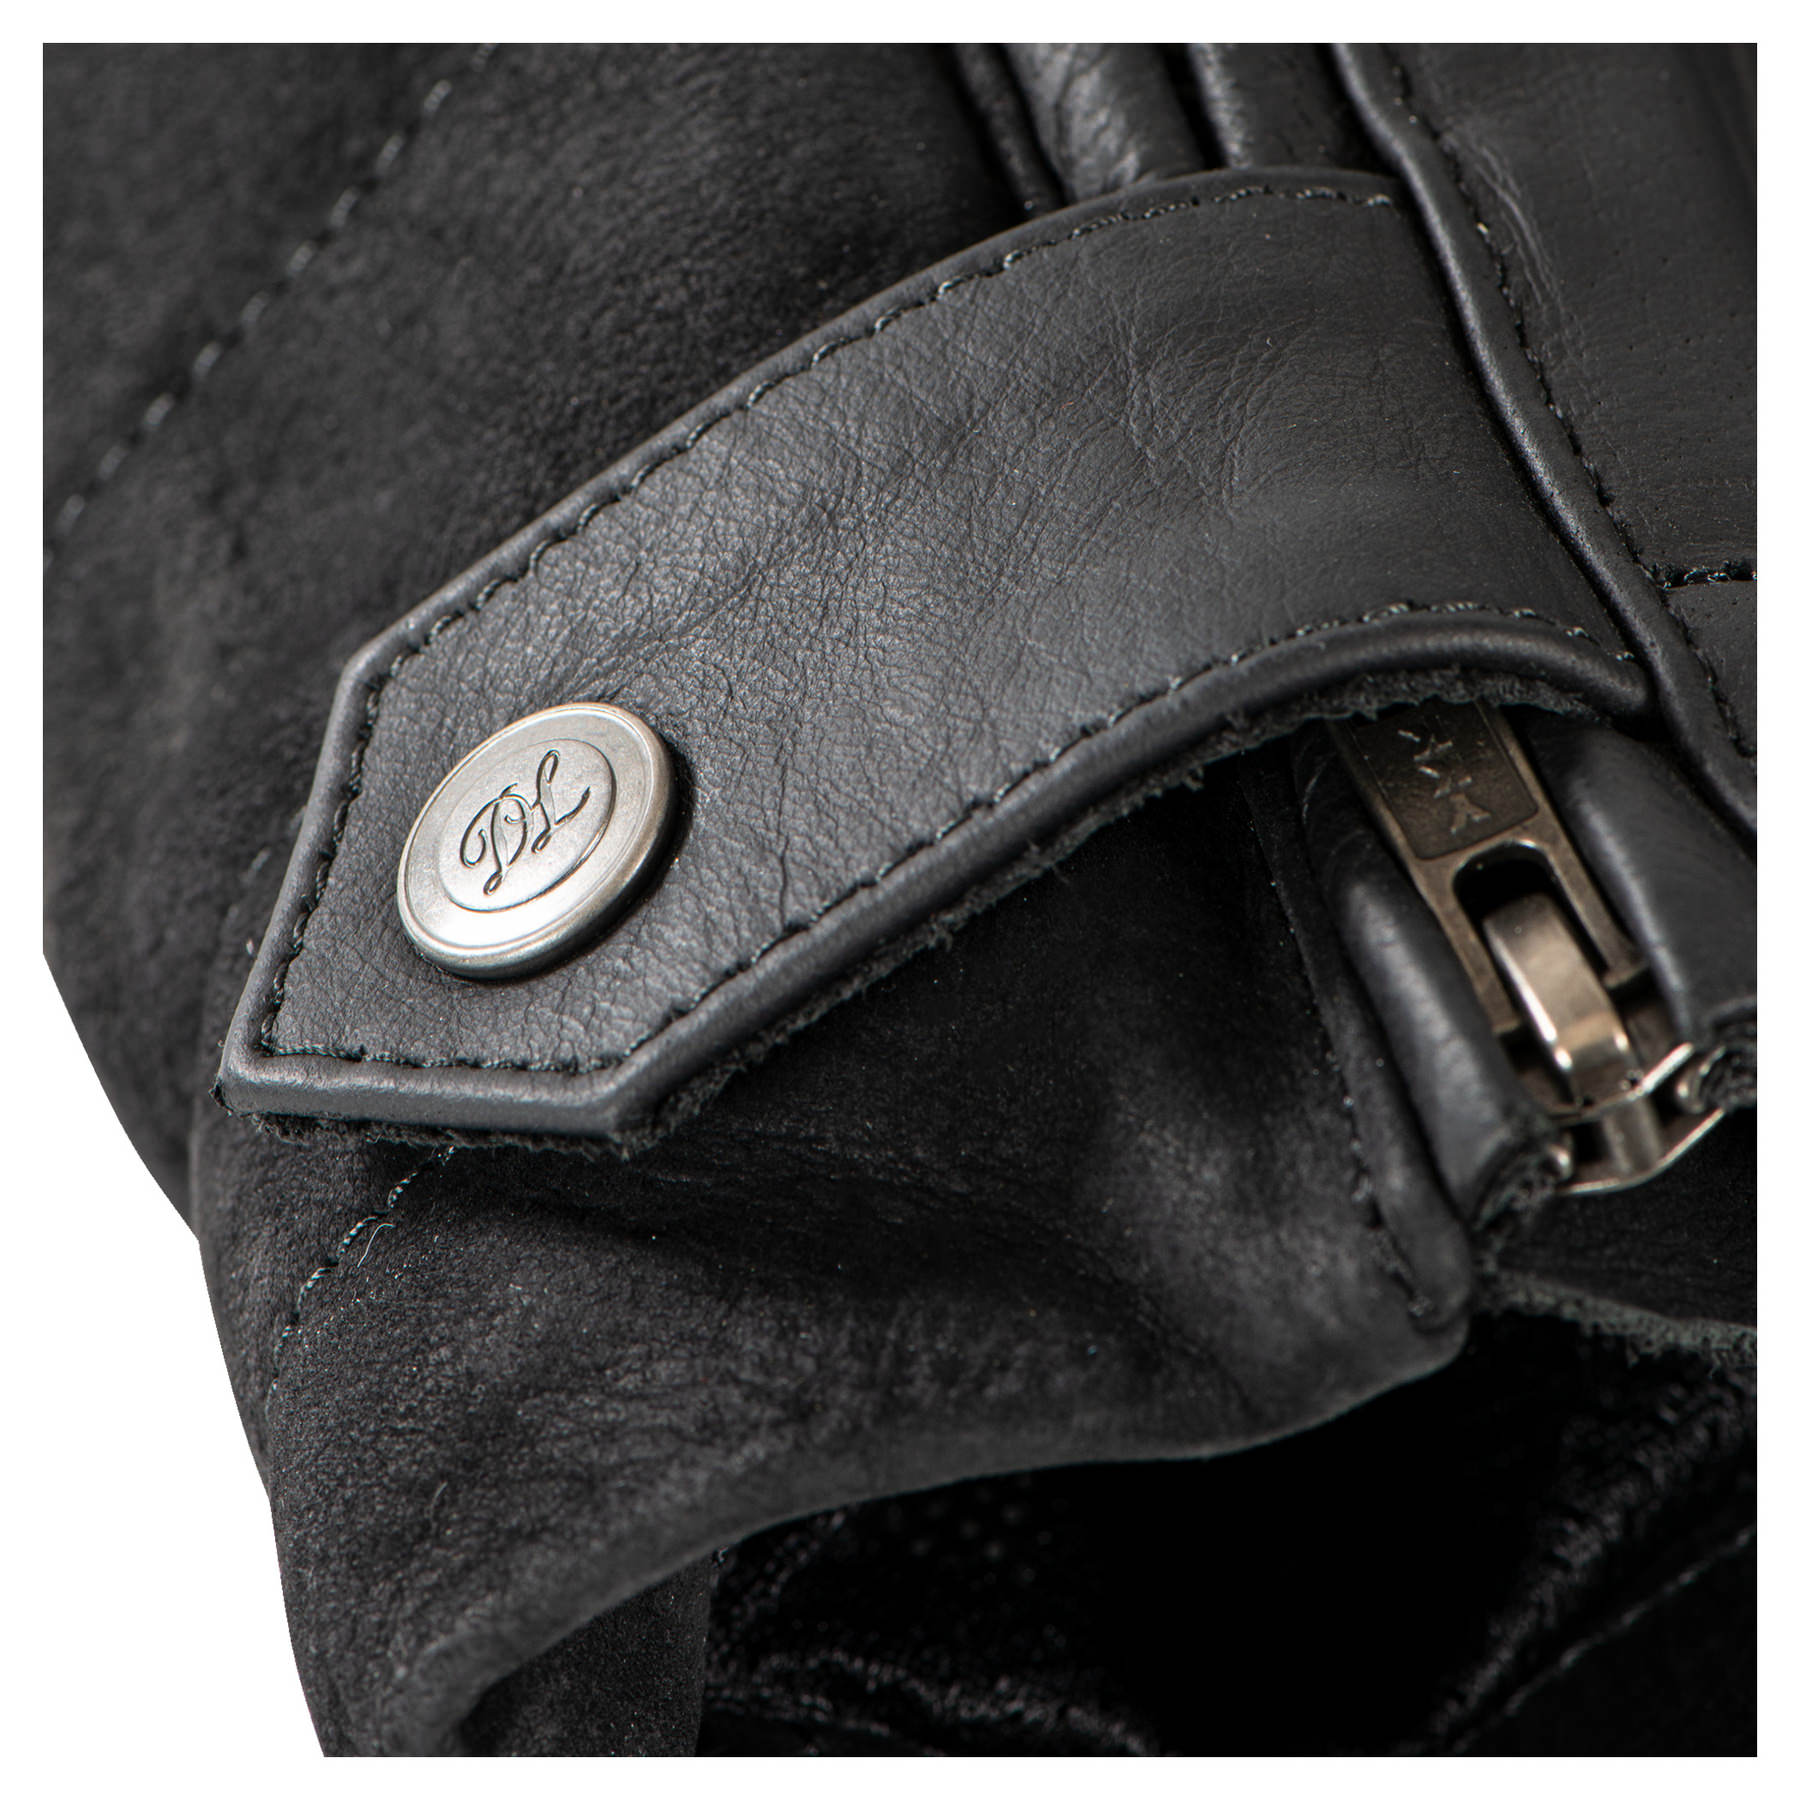 Detlev Louis DL-JM-3 Leather Jacket Review (Buying Guide